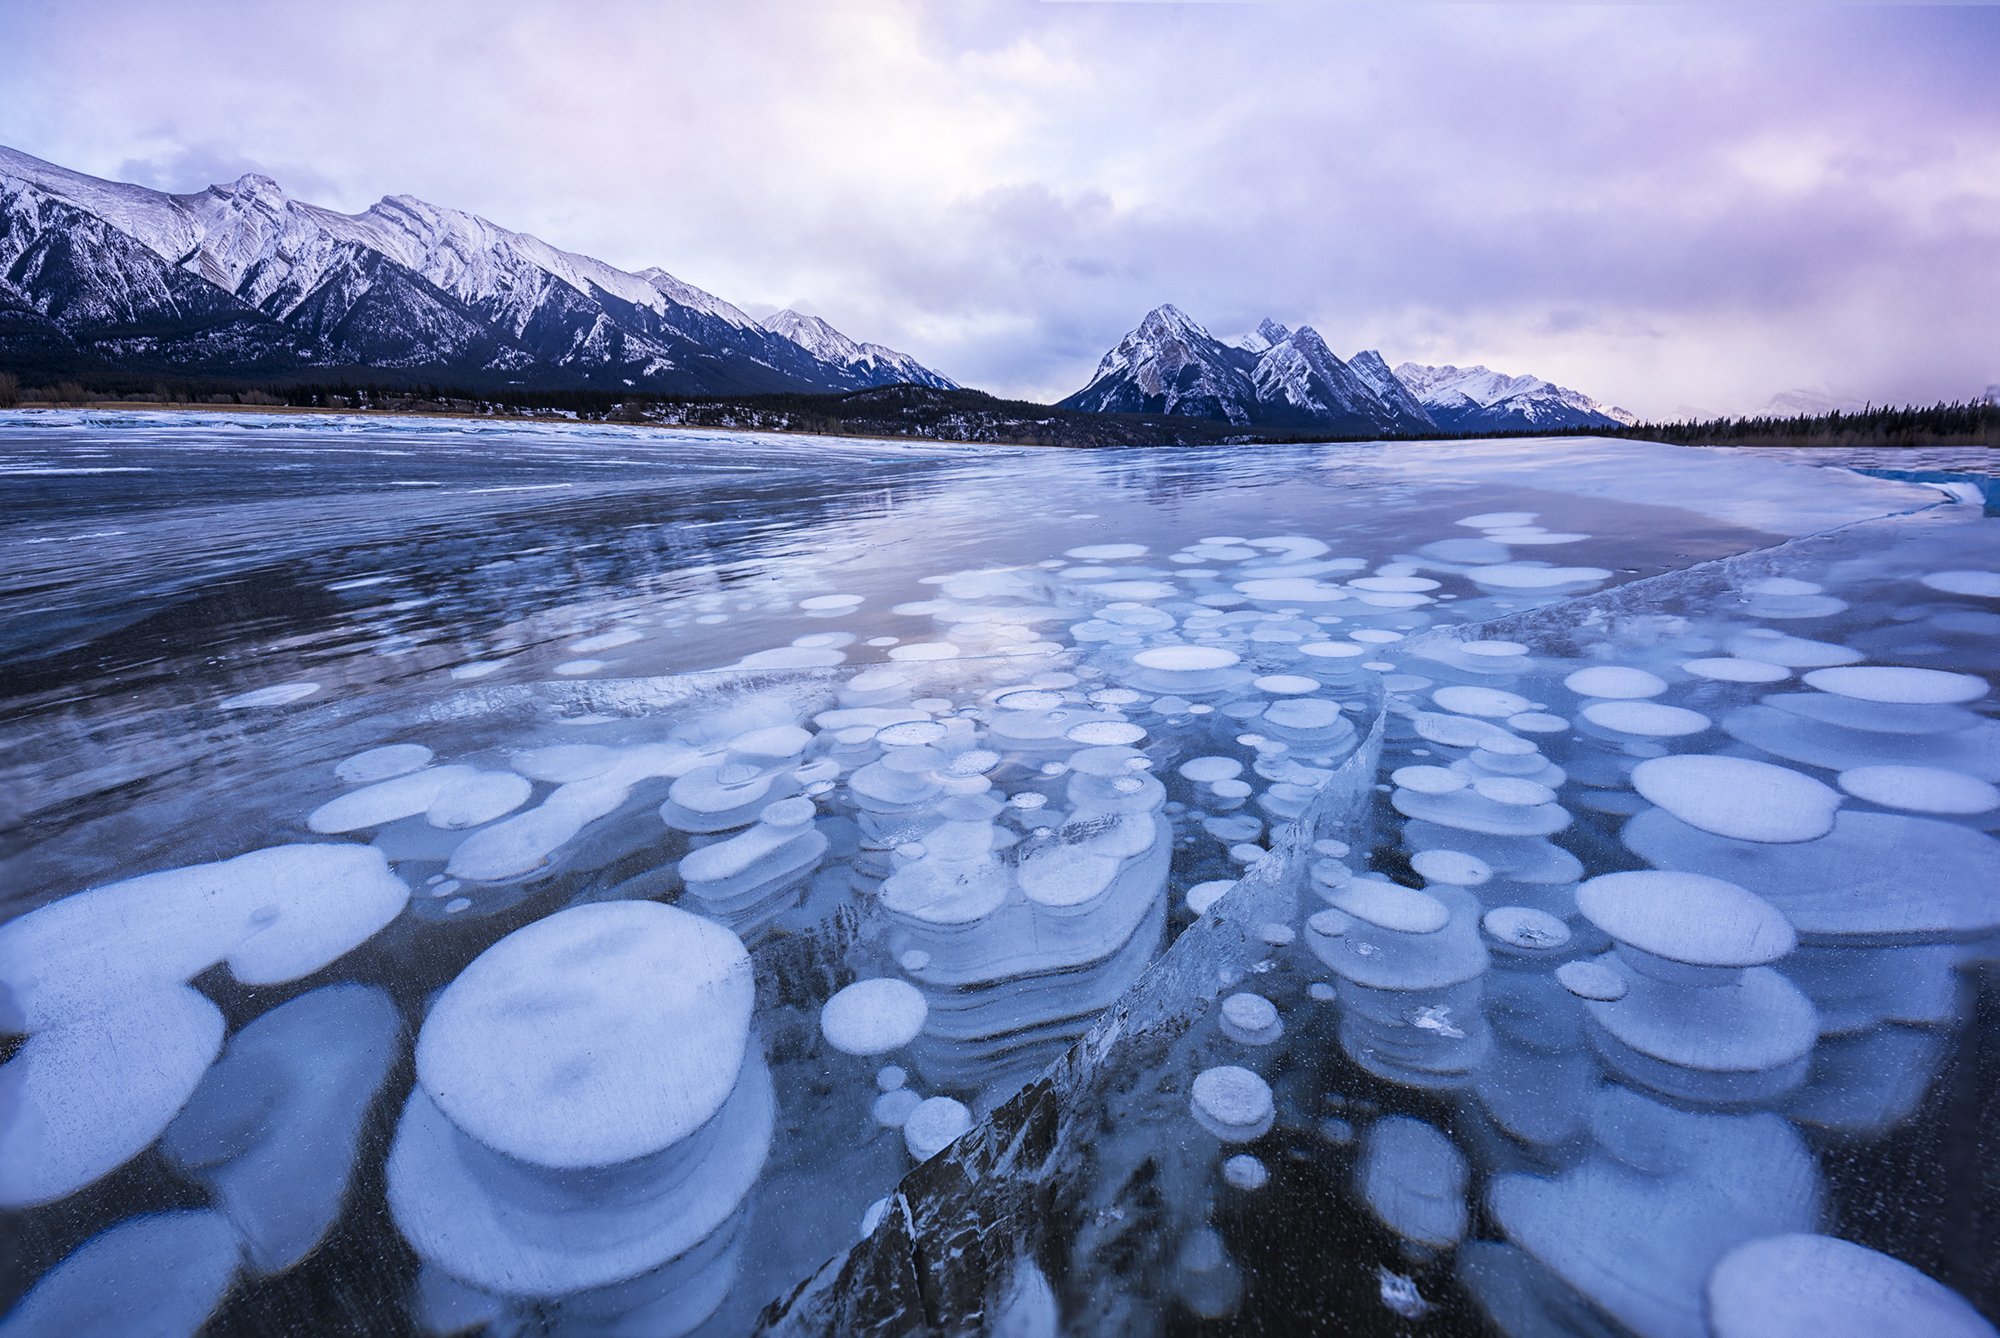 Кипящий лед. Озеро Клилук Канада. Озеро Эйбрахам в Канаде. Ледяные пузыри озера Абрахам Канада. Метановые пузырьки на Байкале.